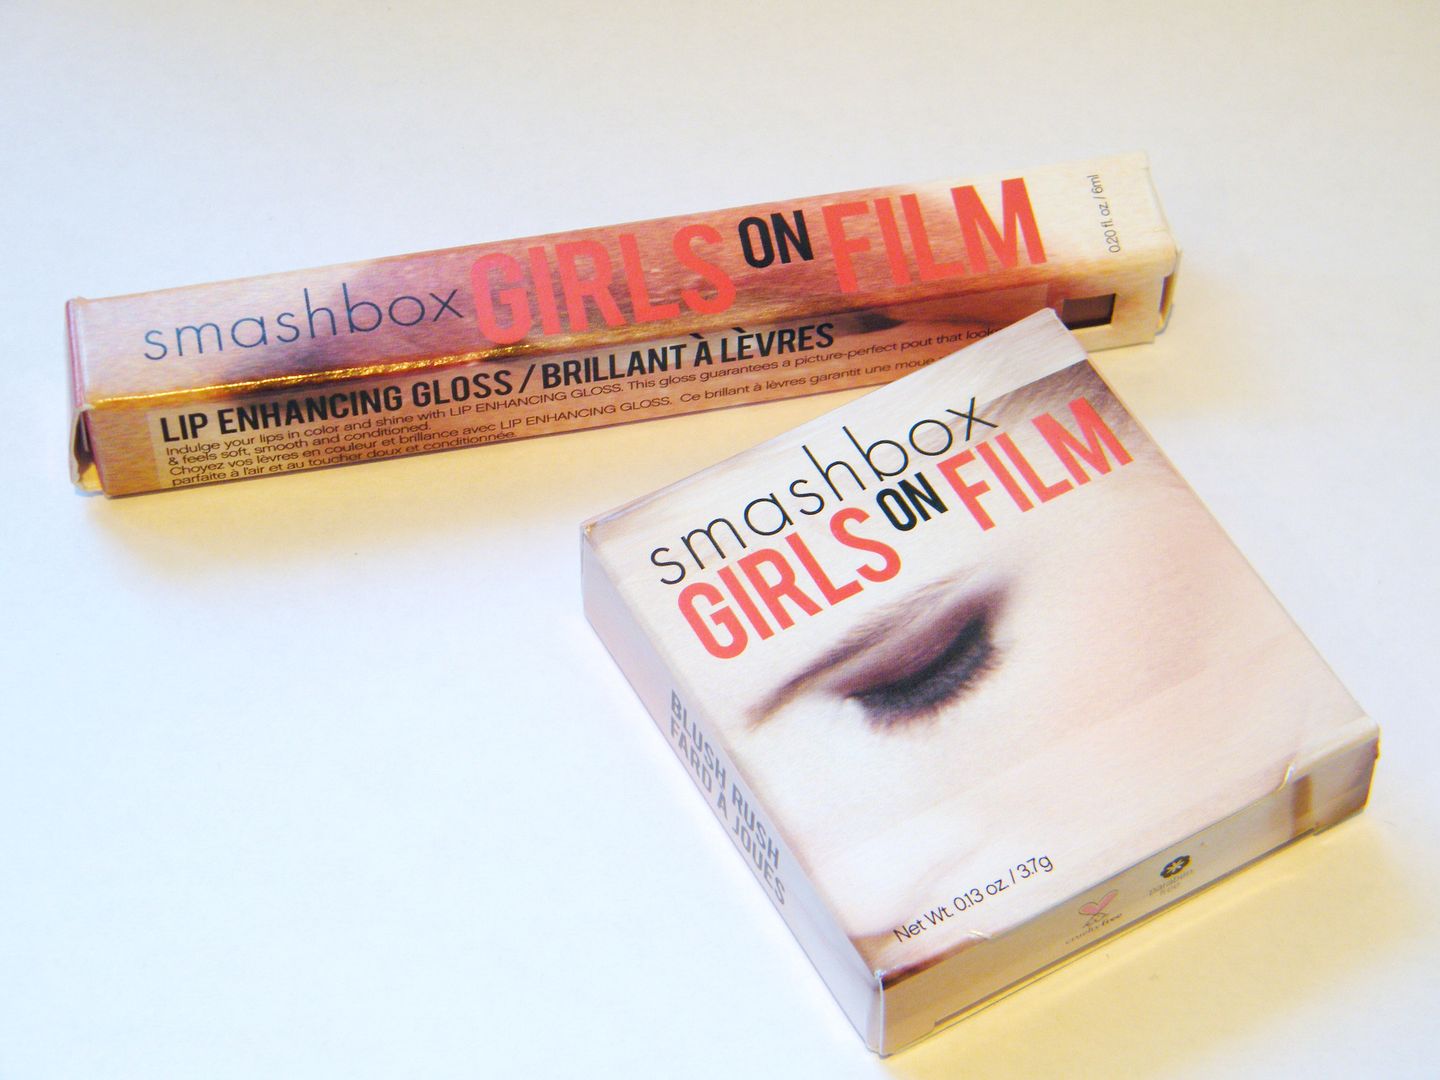 Smashbox Girls On Film Lipgloss & Blush